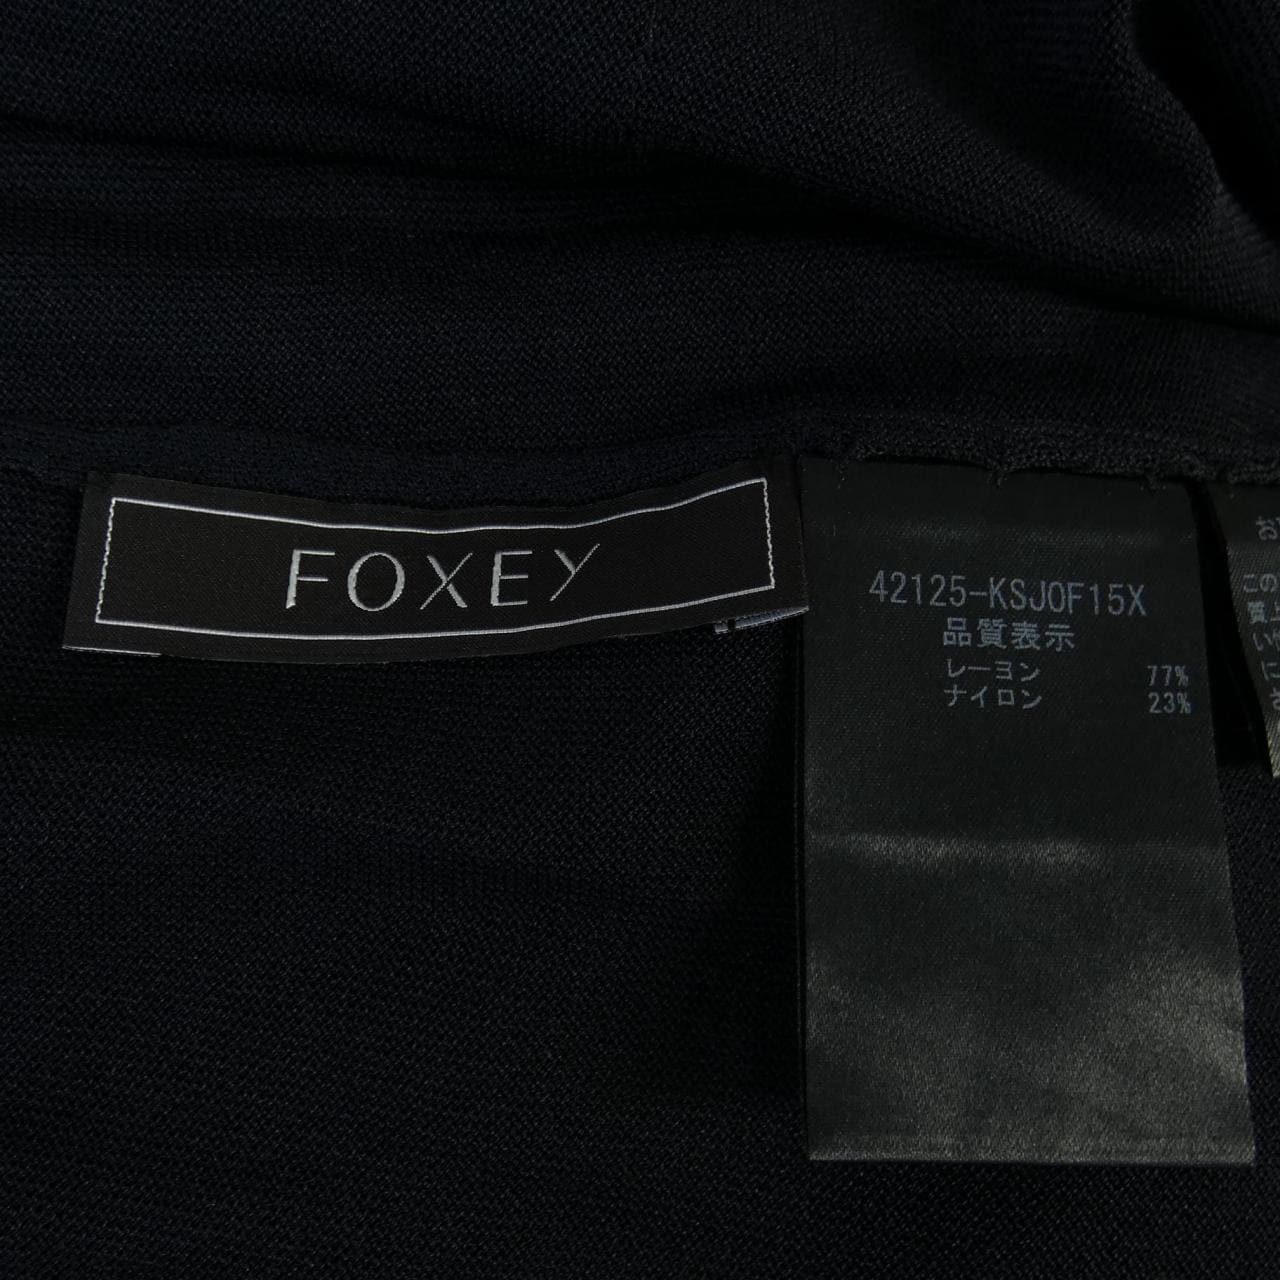 Foxy FOXEY long cardigan